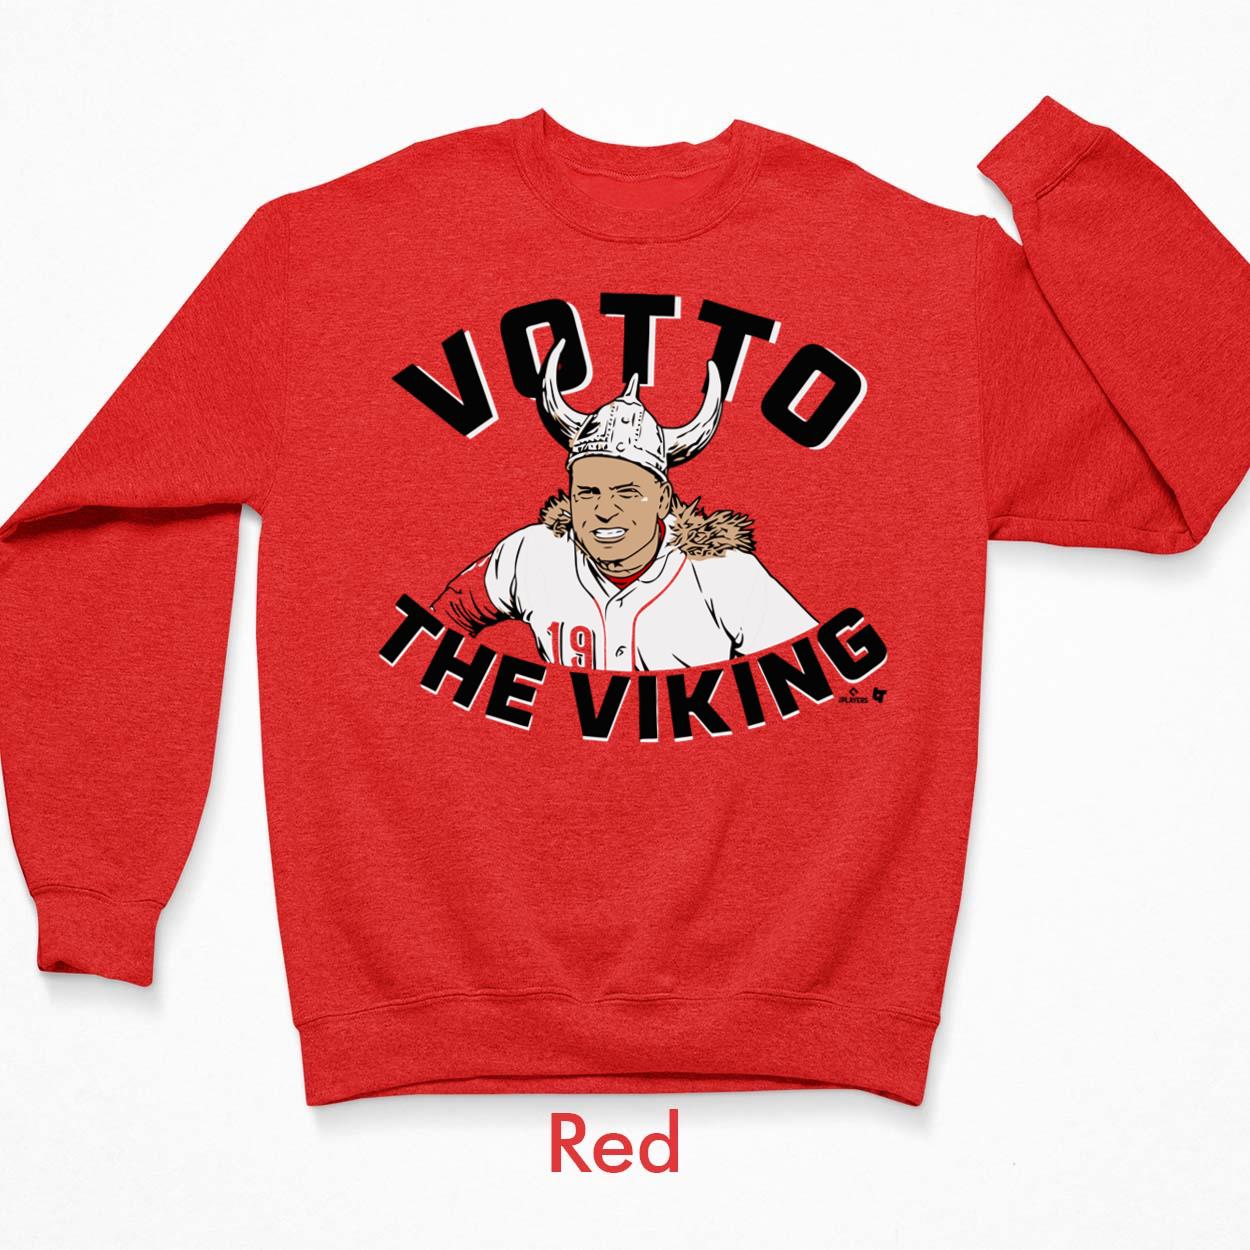 Joey Votto The Viking Shirt, Hoodie, Sweatshirt, Women Tee - Lelemoon